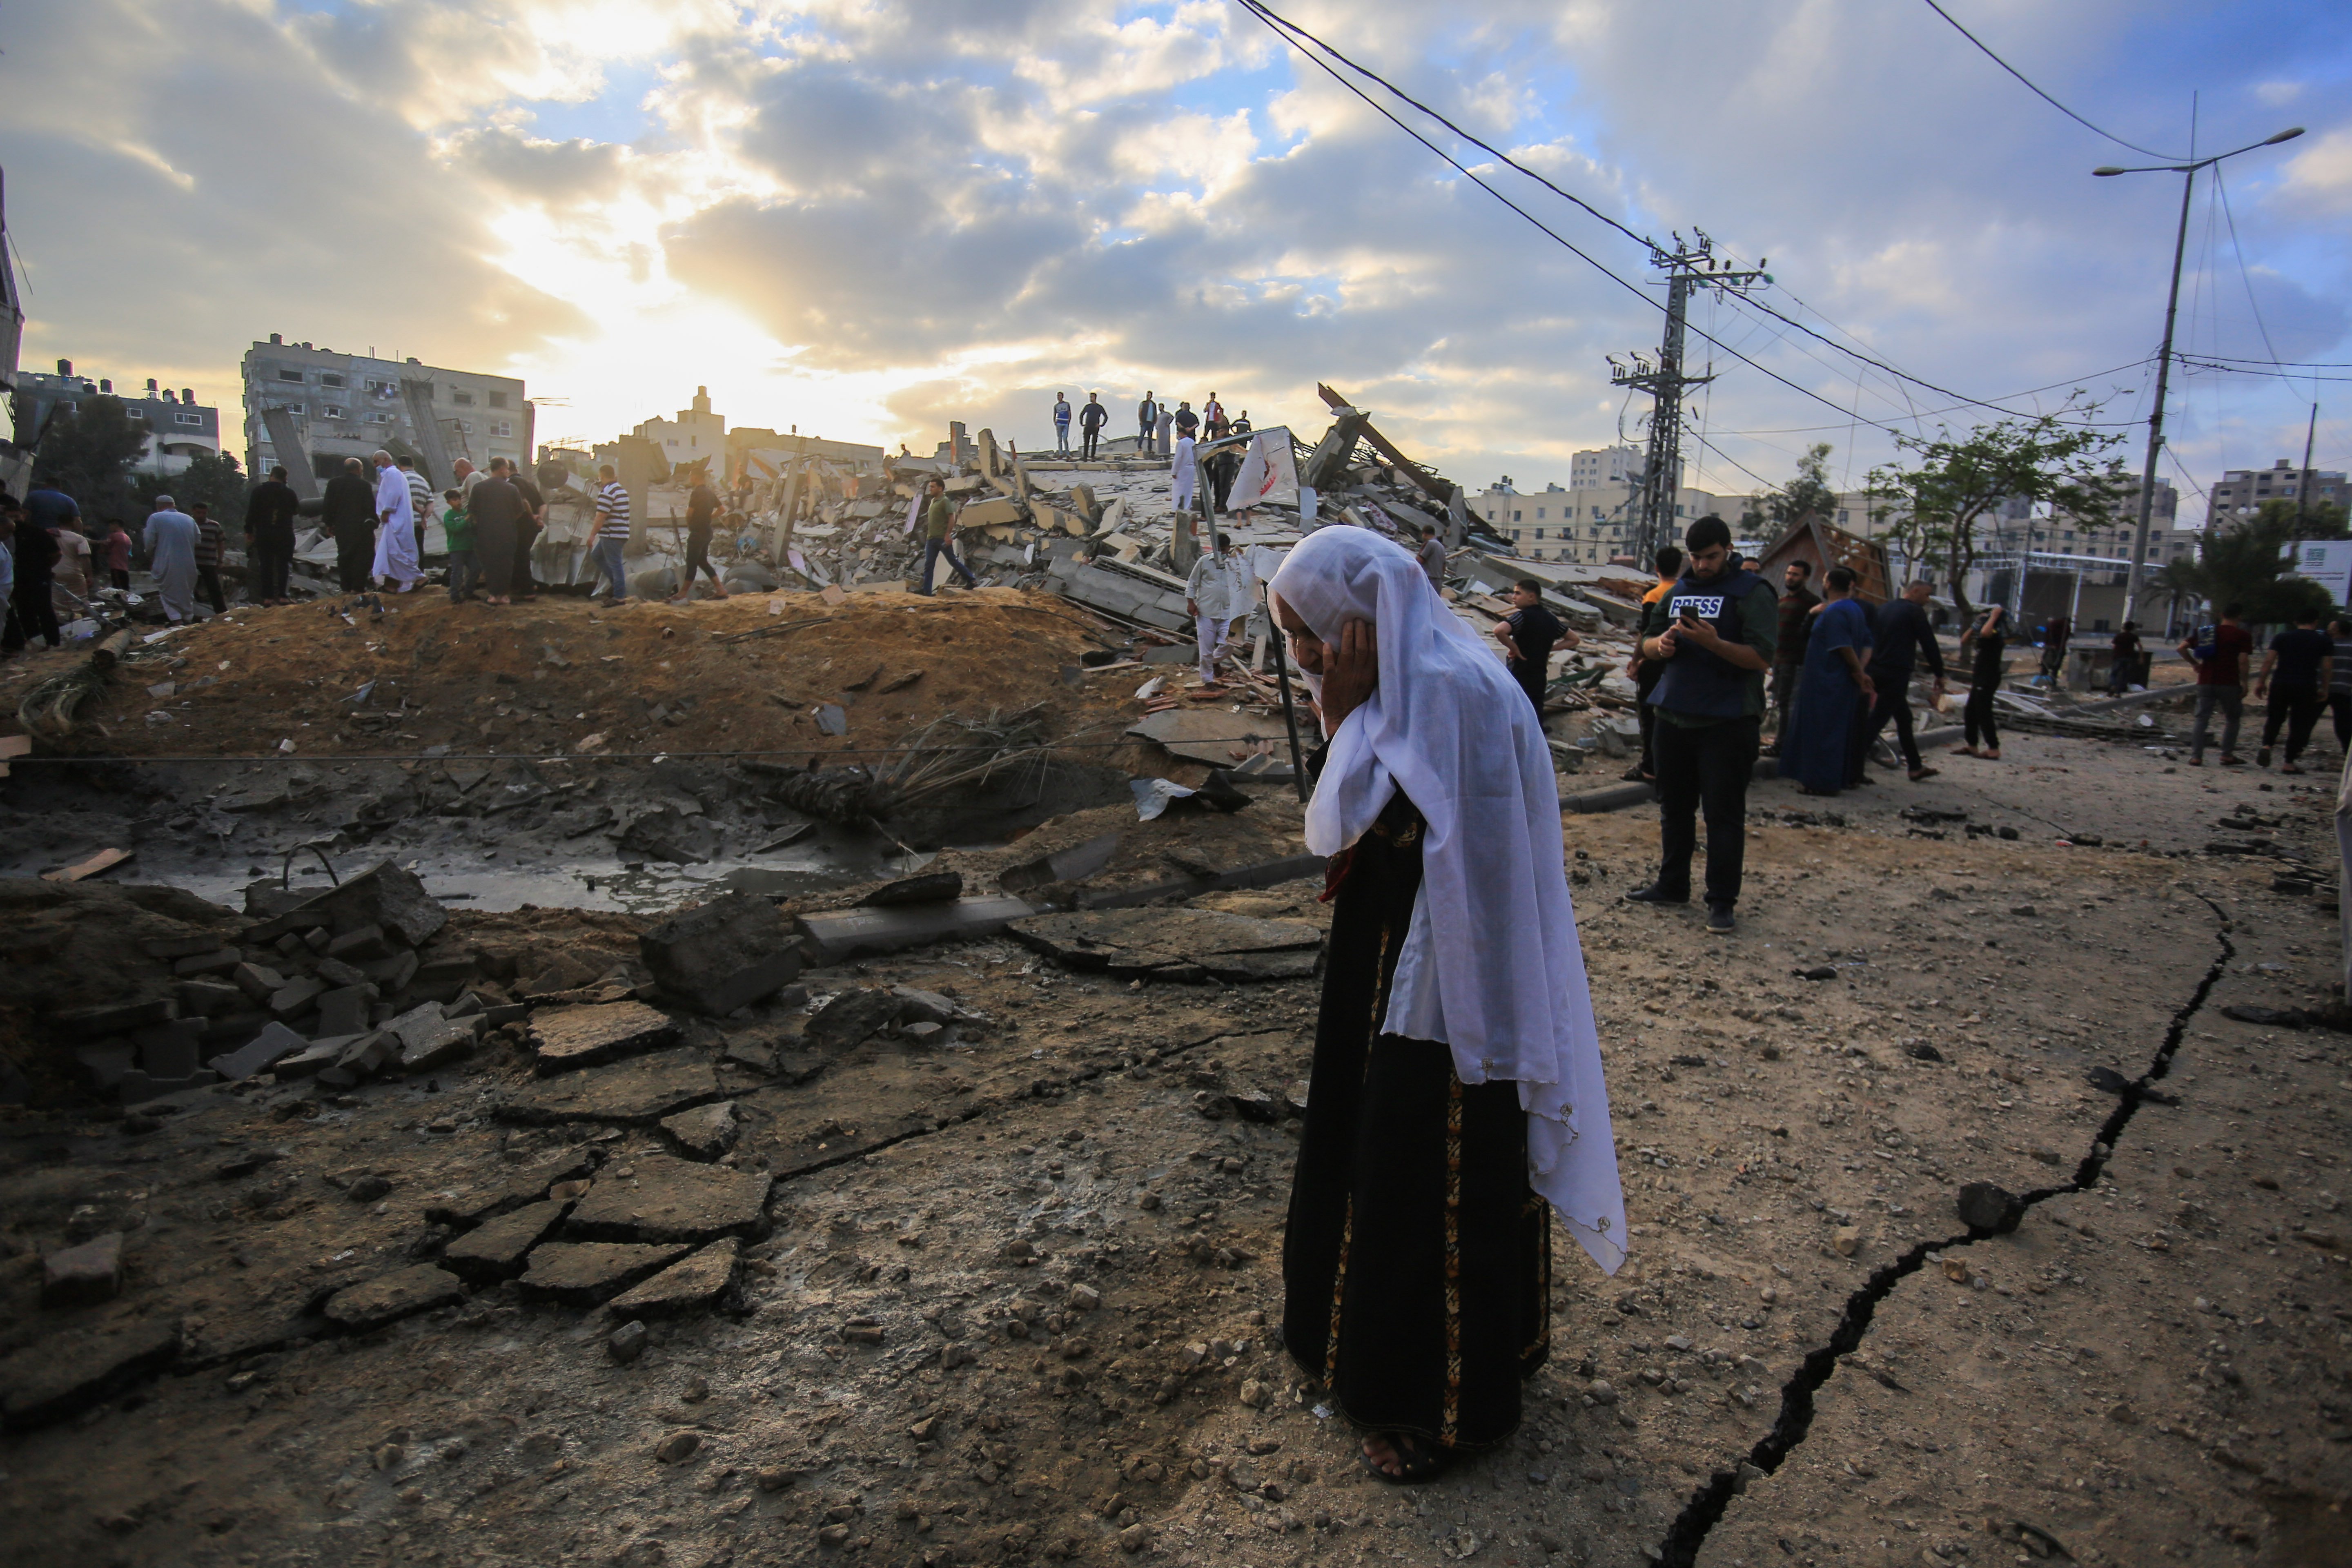 Gaza city after heavy night of Israeli warplanes bombing. Gaza under fire, the Gaza Strip, Palestine - 13 May 2021. (Photo: Mahmoud Khattab/Quds Net News via ZUMA Wire/Shutterstock)